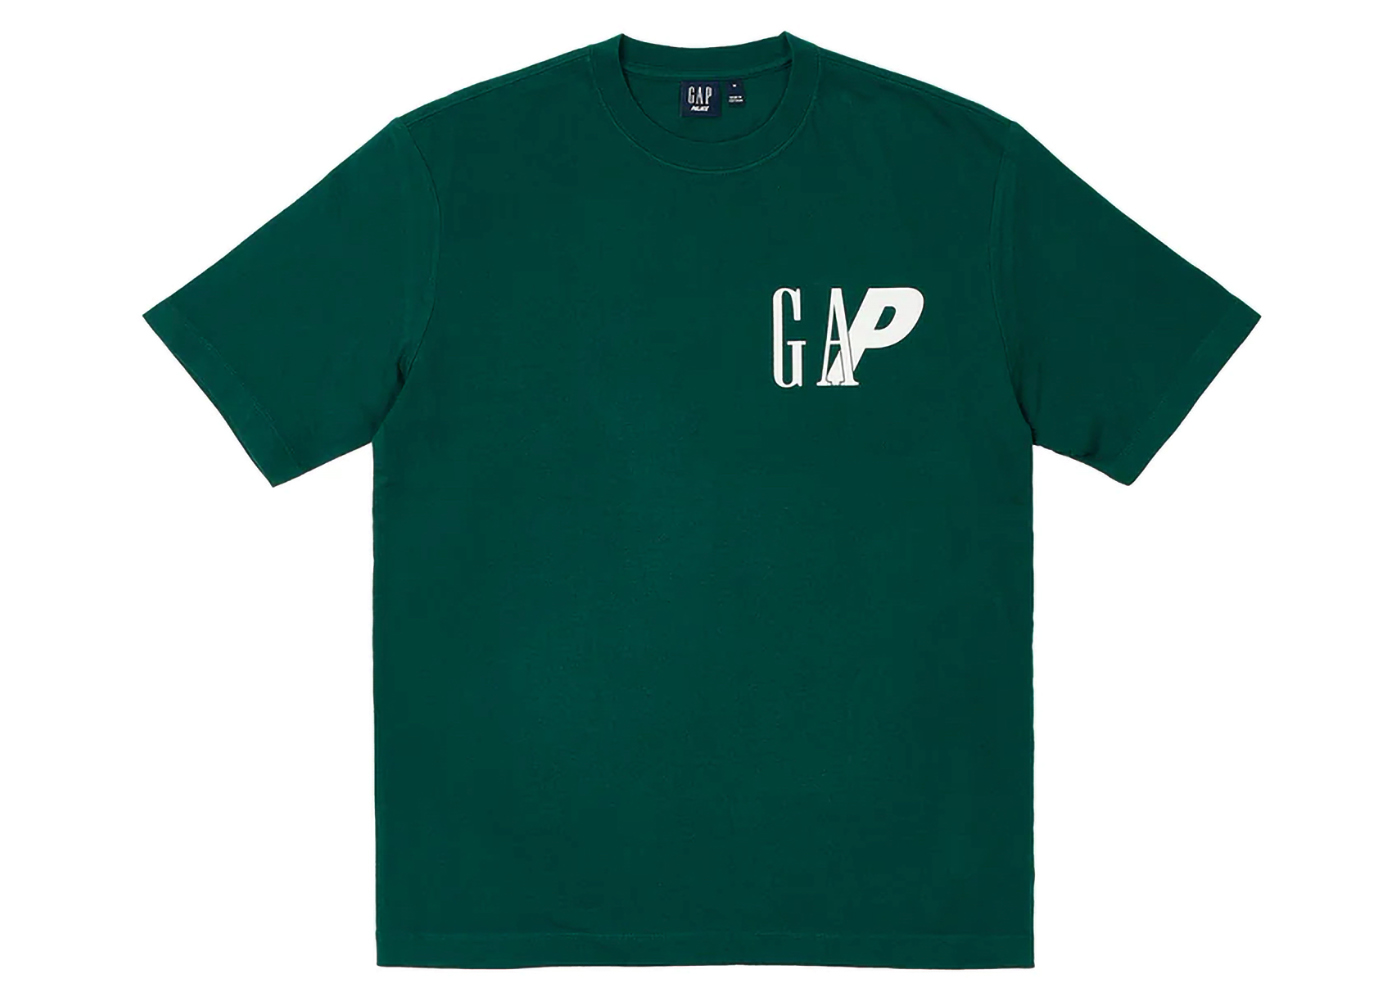 Palace x Gap T-Shirt Rain Forest